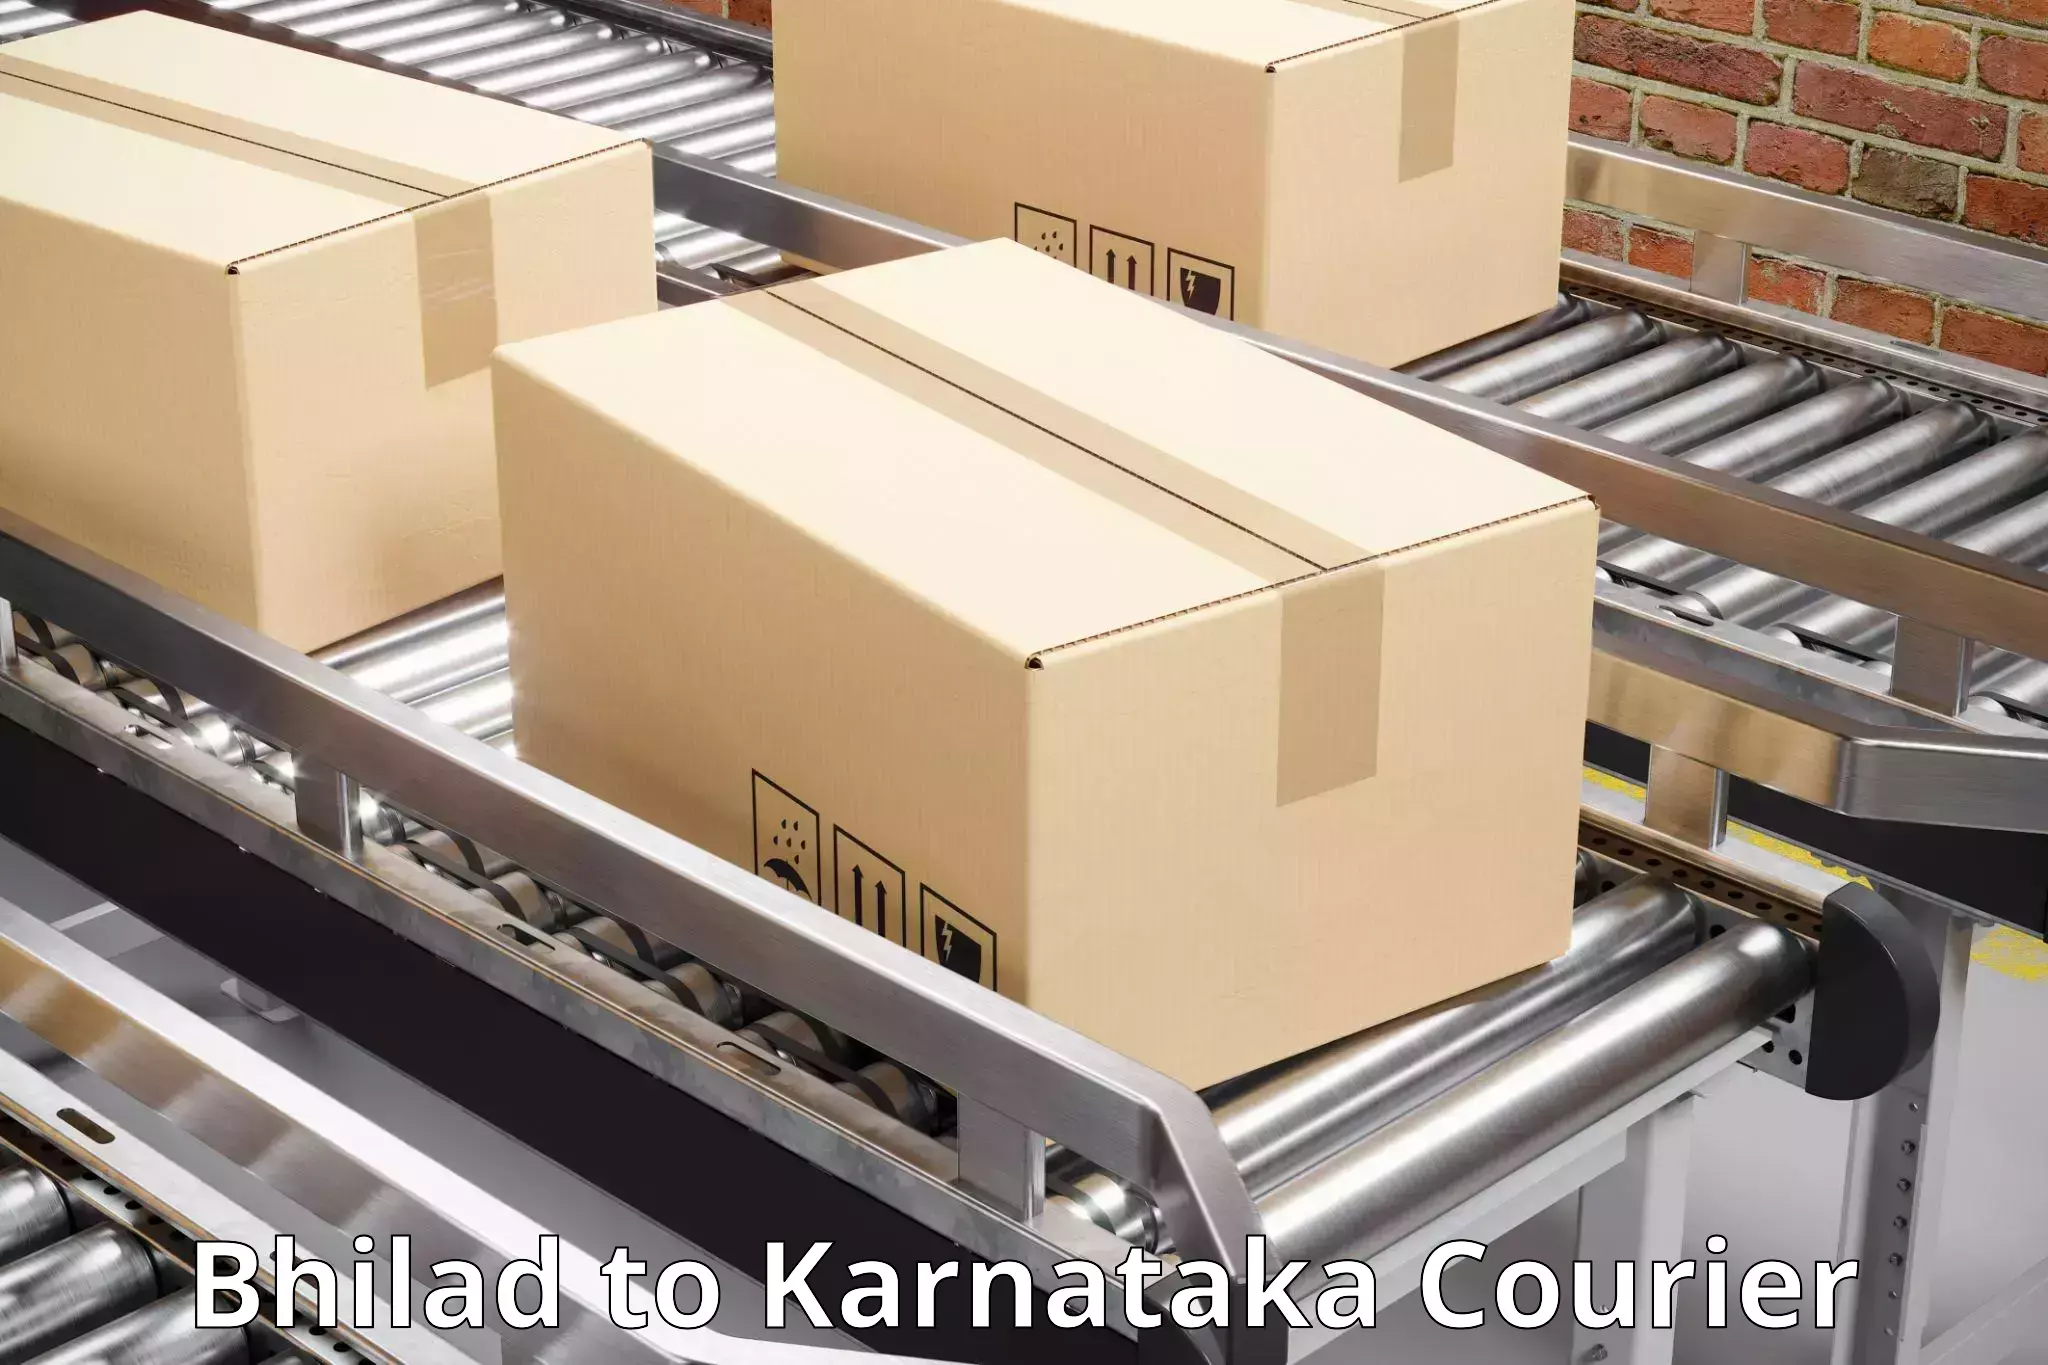 Logistics service provider Bhilad to Karnataka